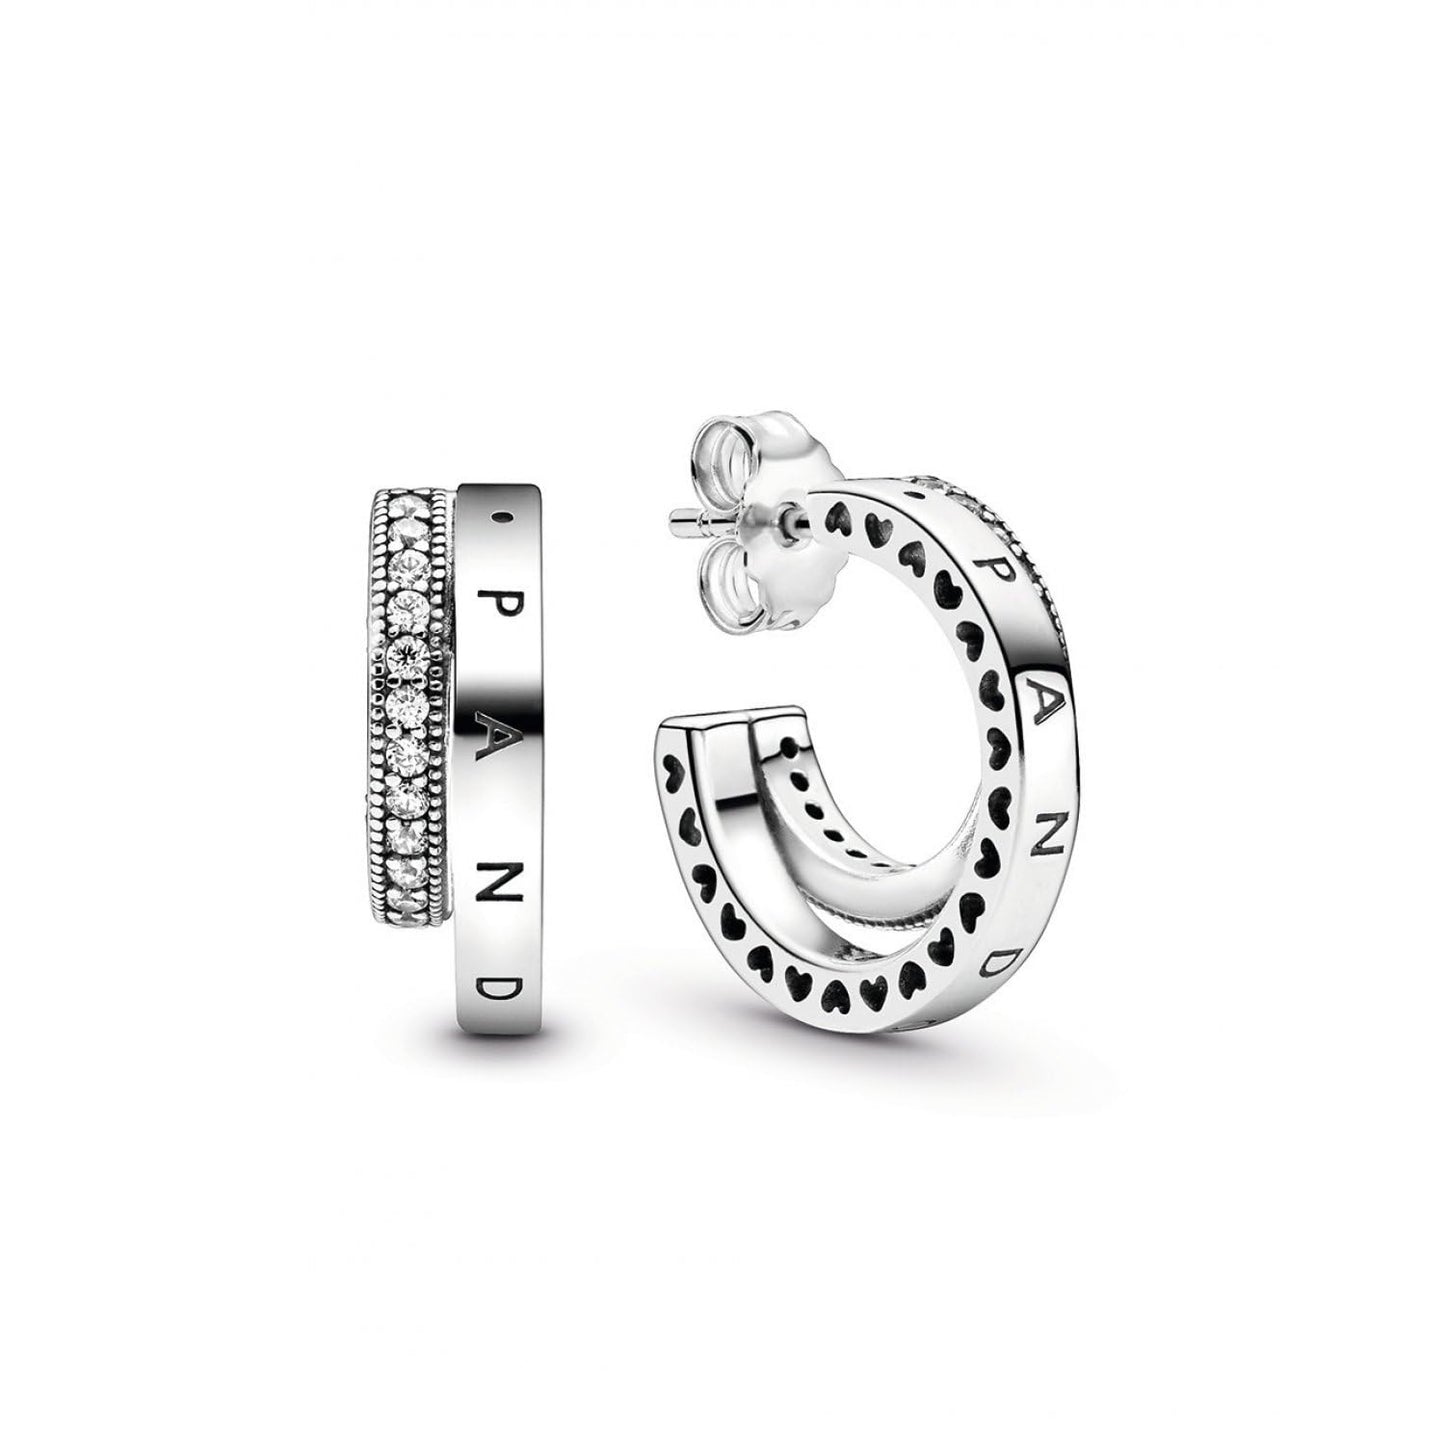 Pandora Double pave earrings in silver, 1,6cm, Precious metal, Cubic Zirconia